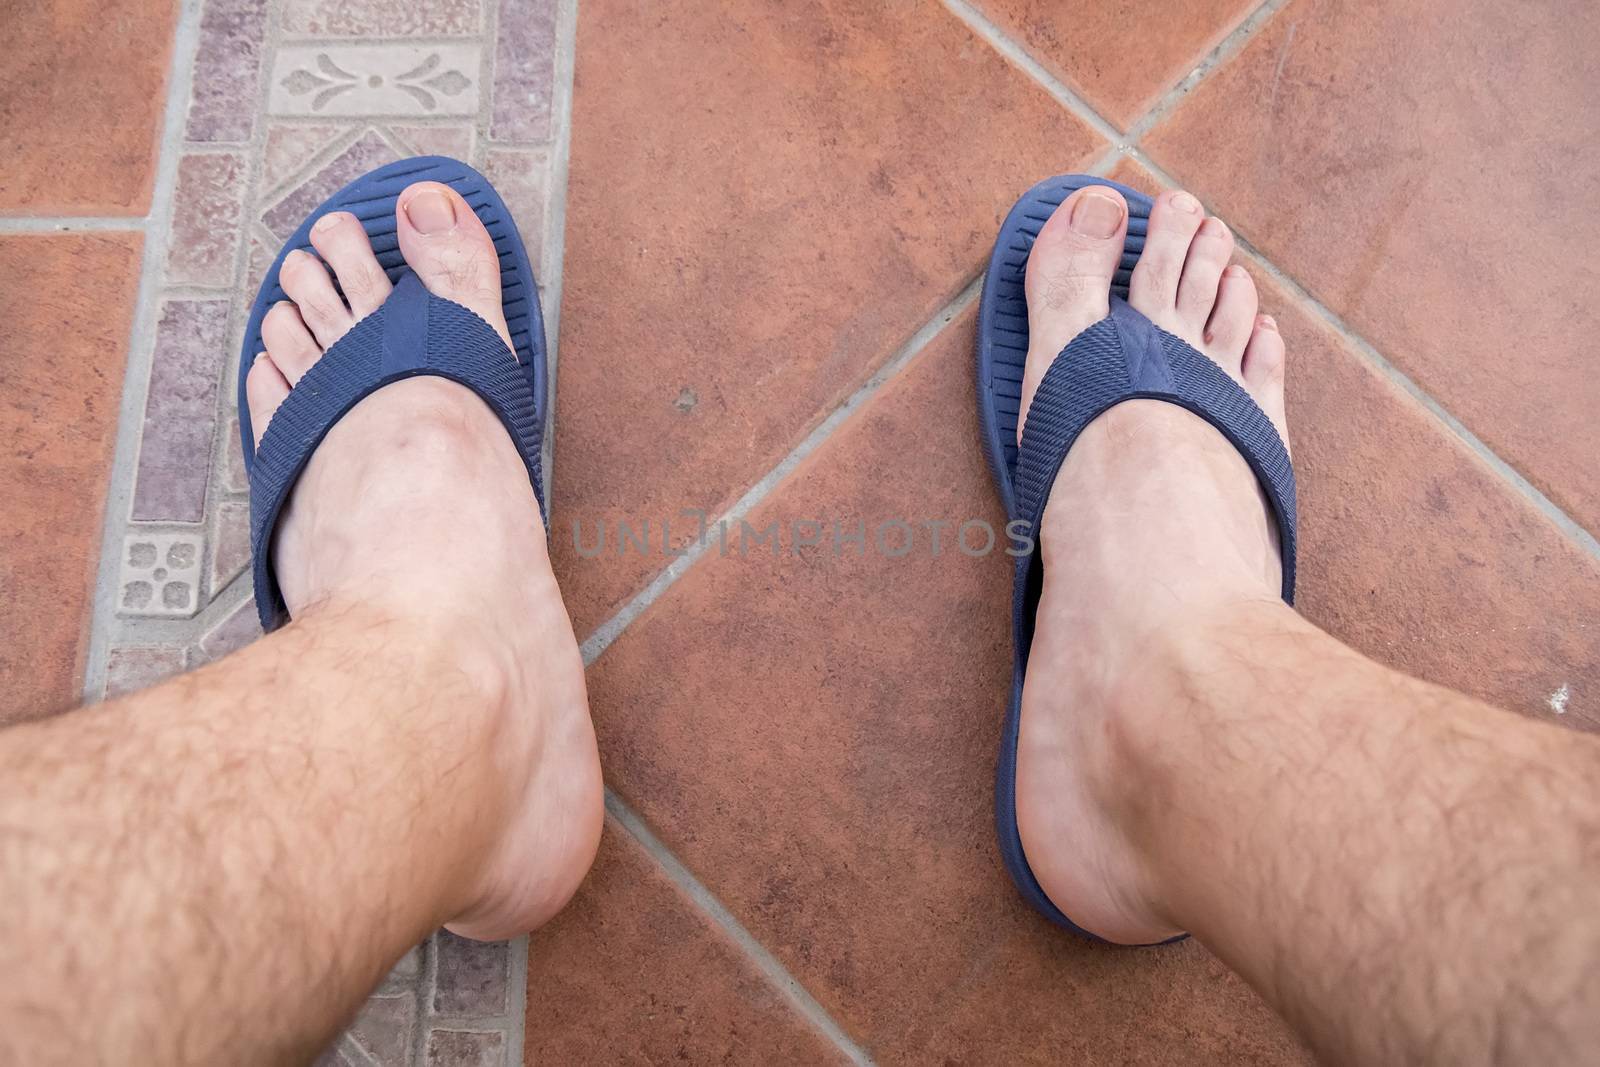  Feet in blue flip flops at summer by max8xam